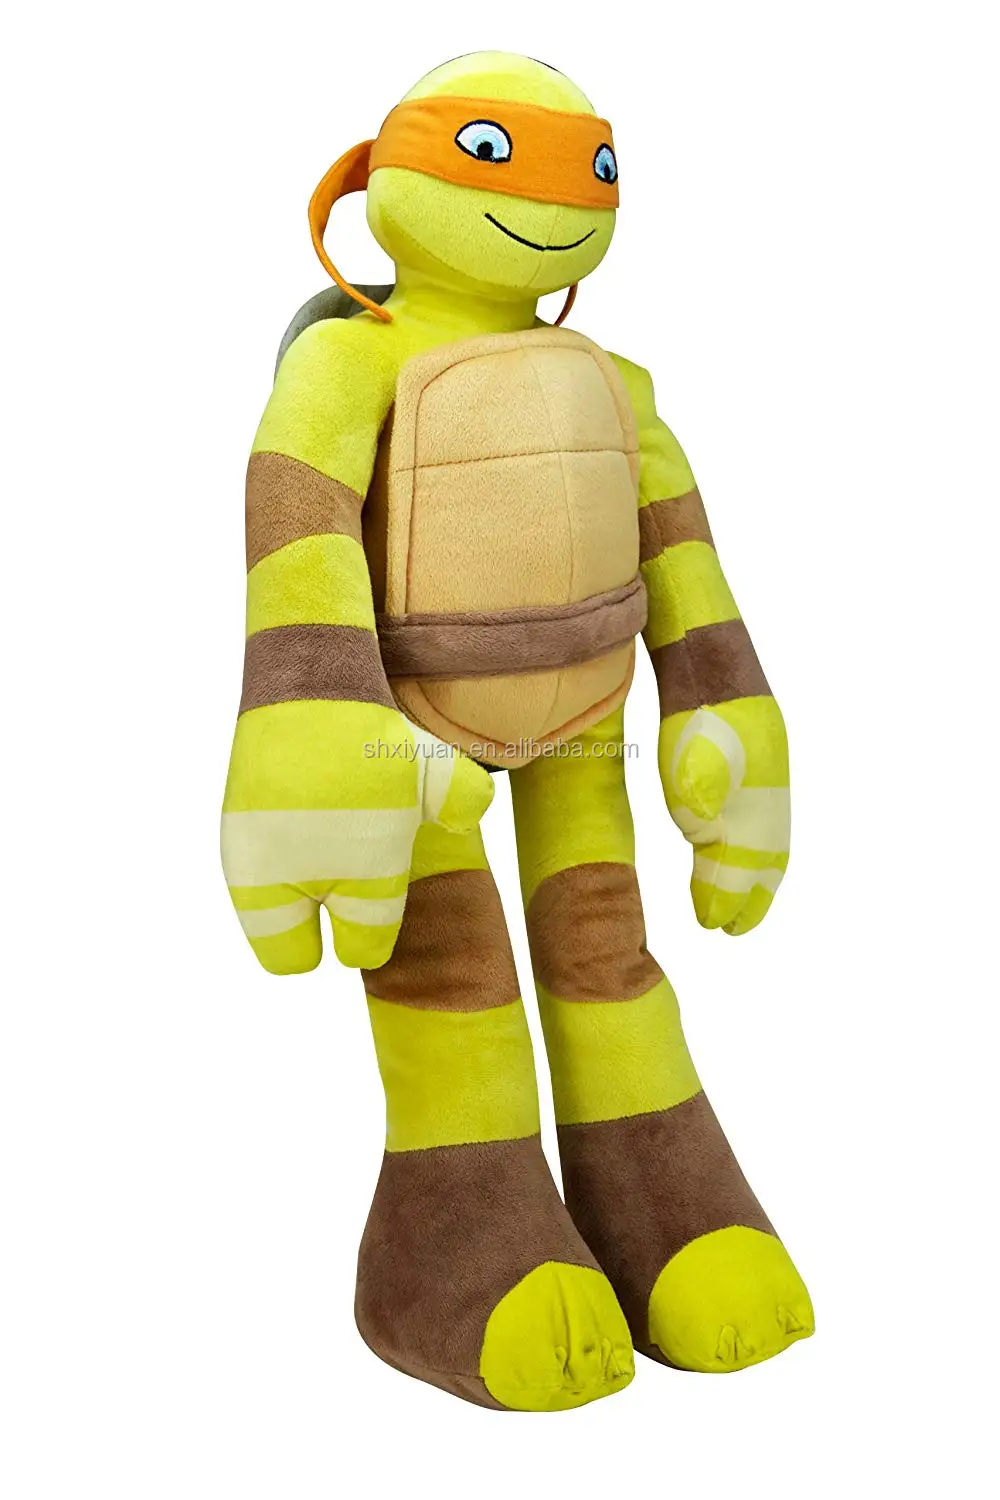 New Mascot Plush Toy Figure Doll Soft Stuffed Animals Custom Toy Ninja  Turtles - Buy Ninja Turtles,Plush Toy,Custom Toy Product on 